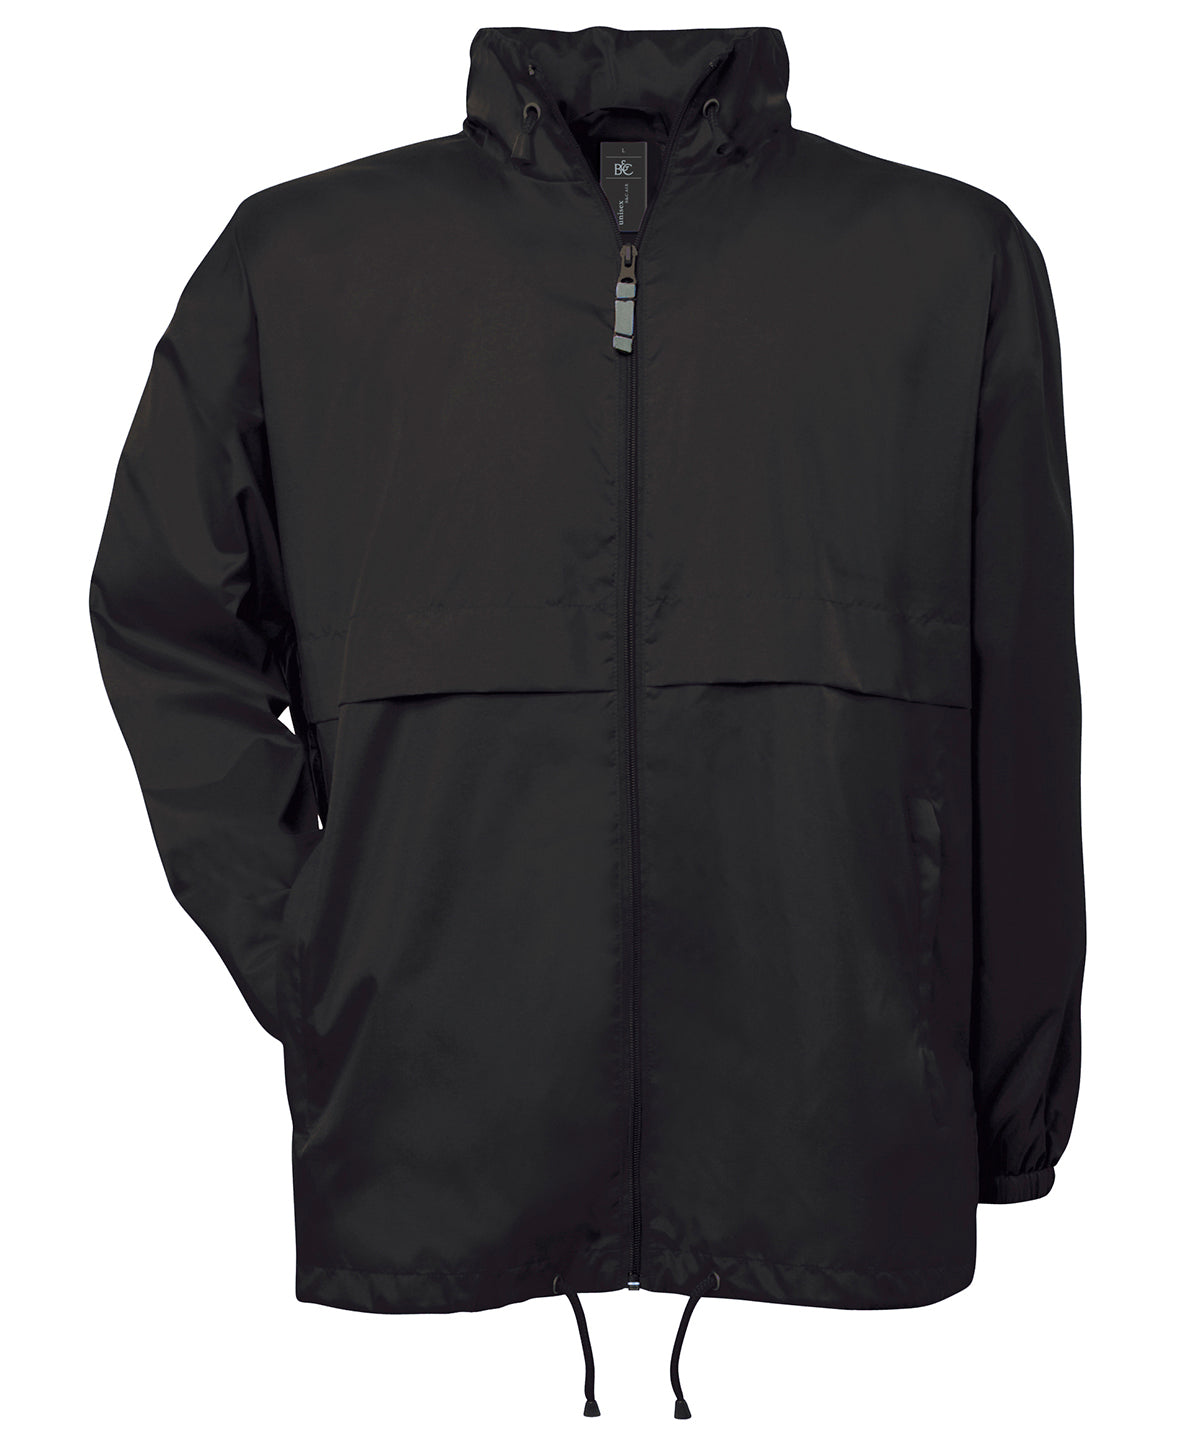 Personalised Jackets - Black B&C Collection B&C Air windbreaker